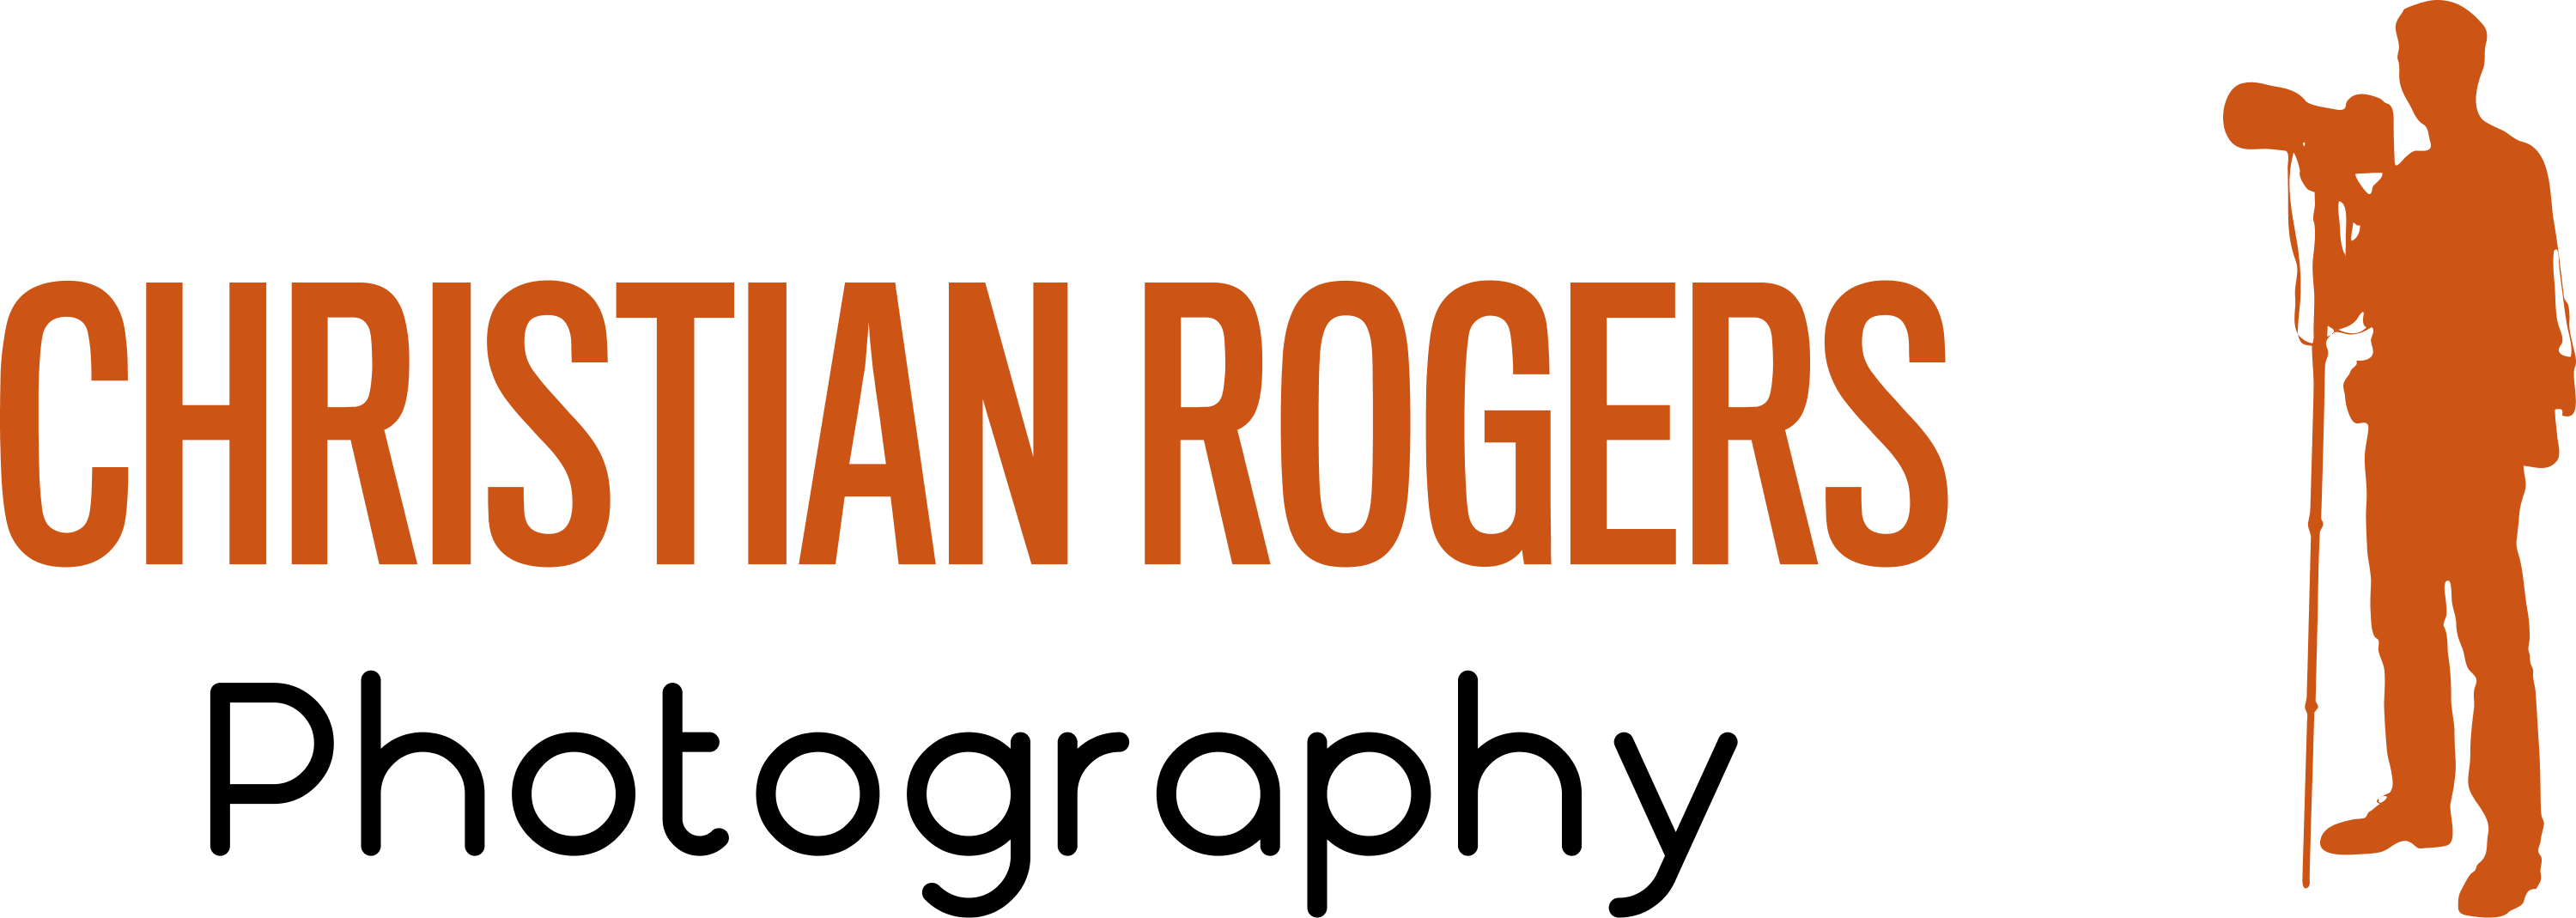 Christian Rogers's Portfolio